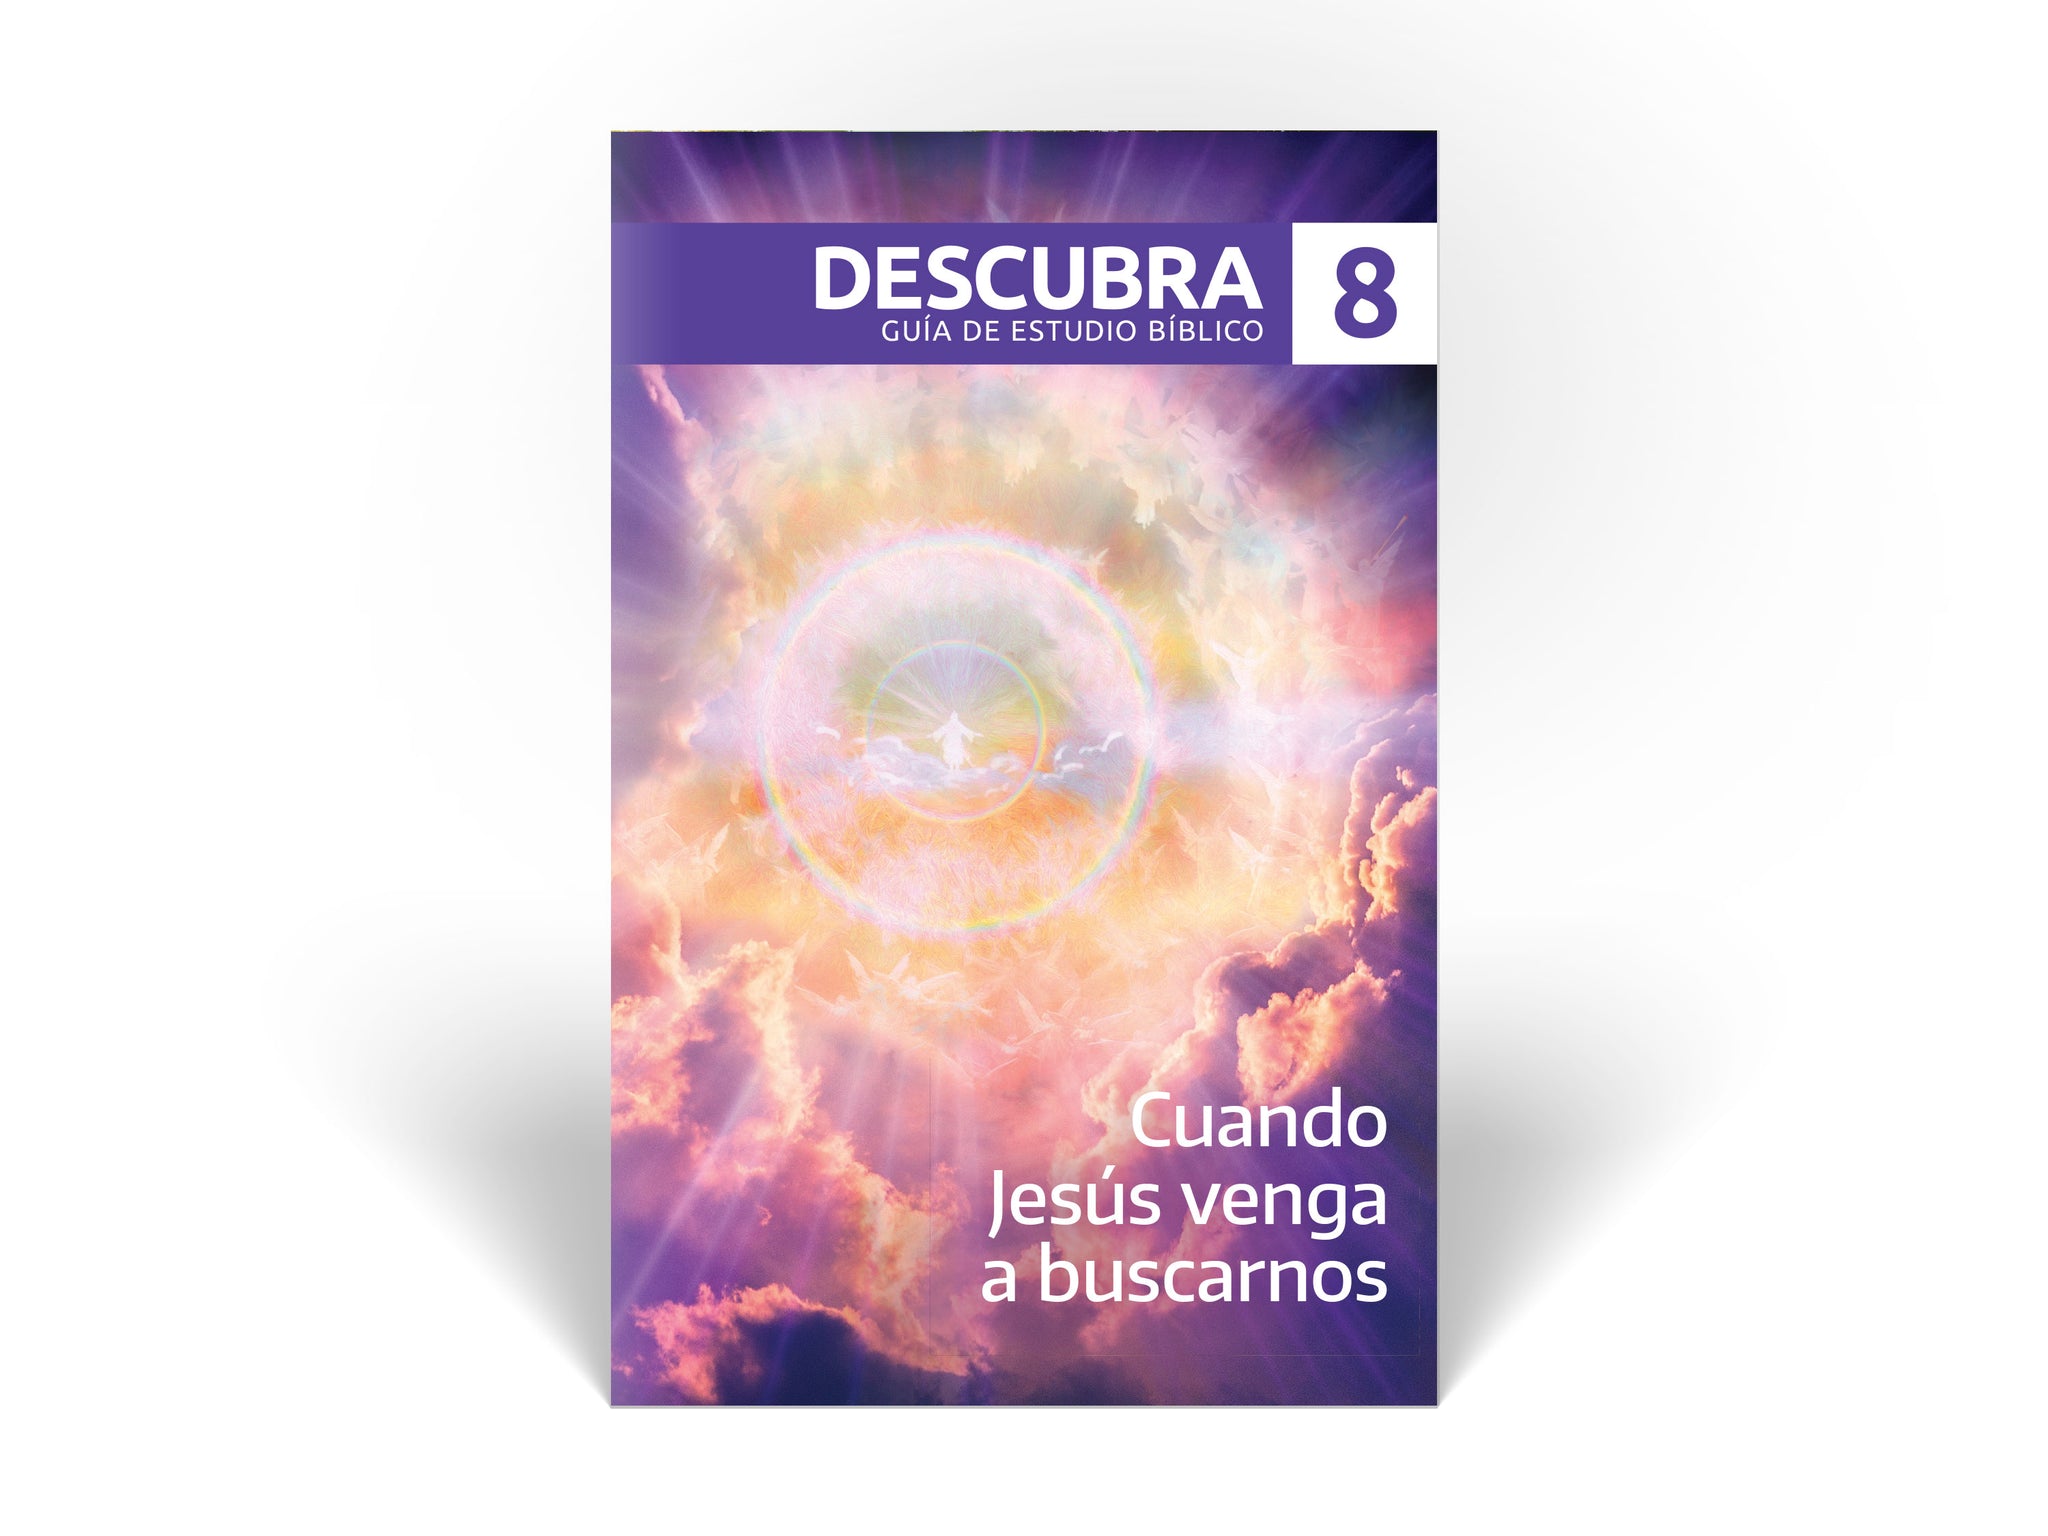 Descubra Guide #8 - Cuando Jesús venga a buscarnos